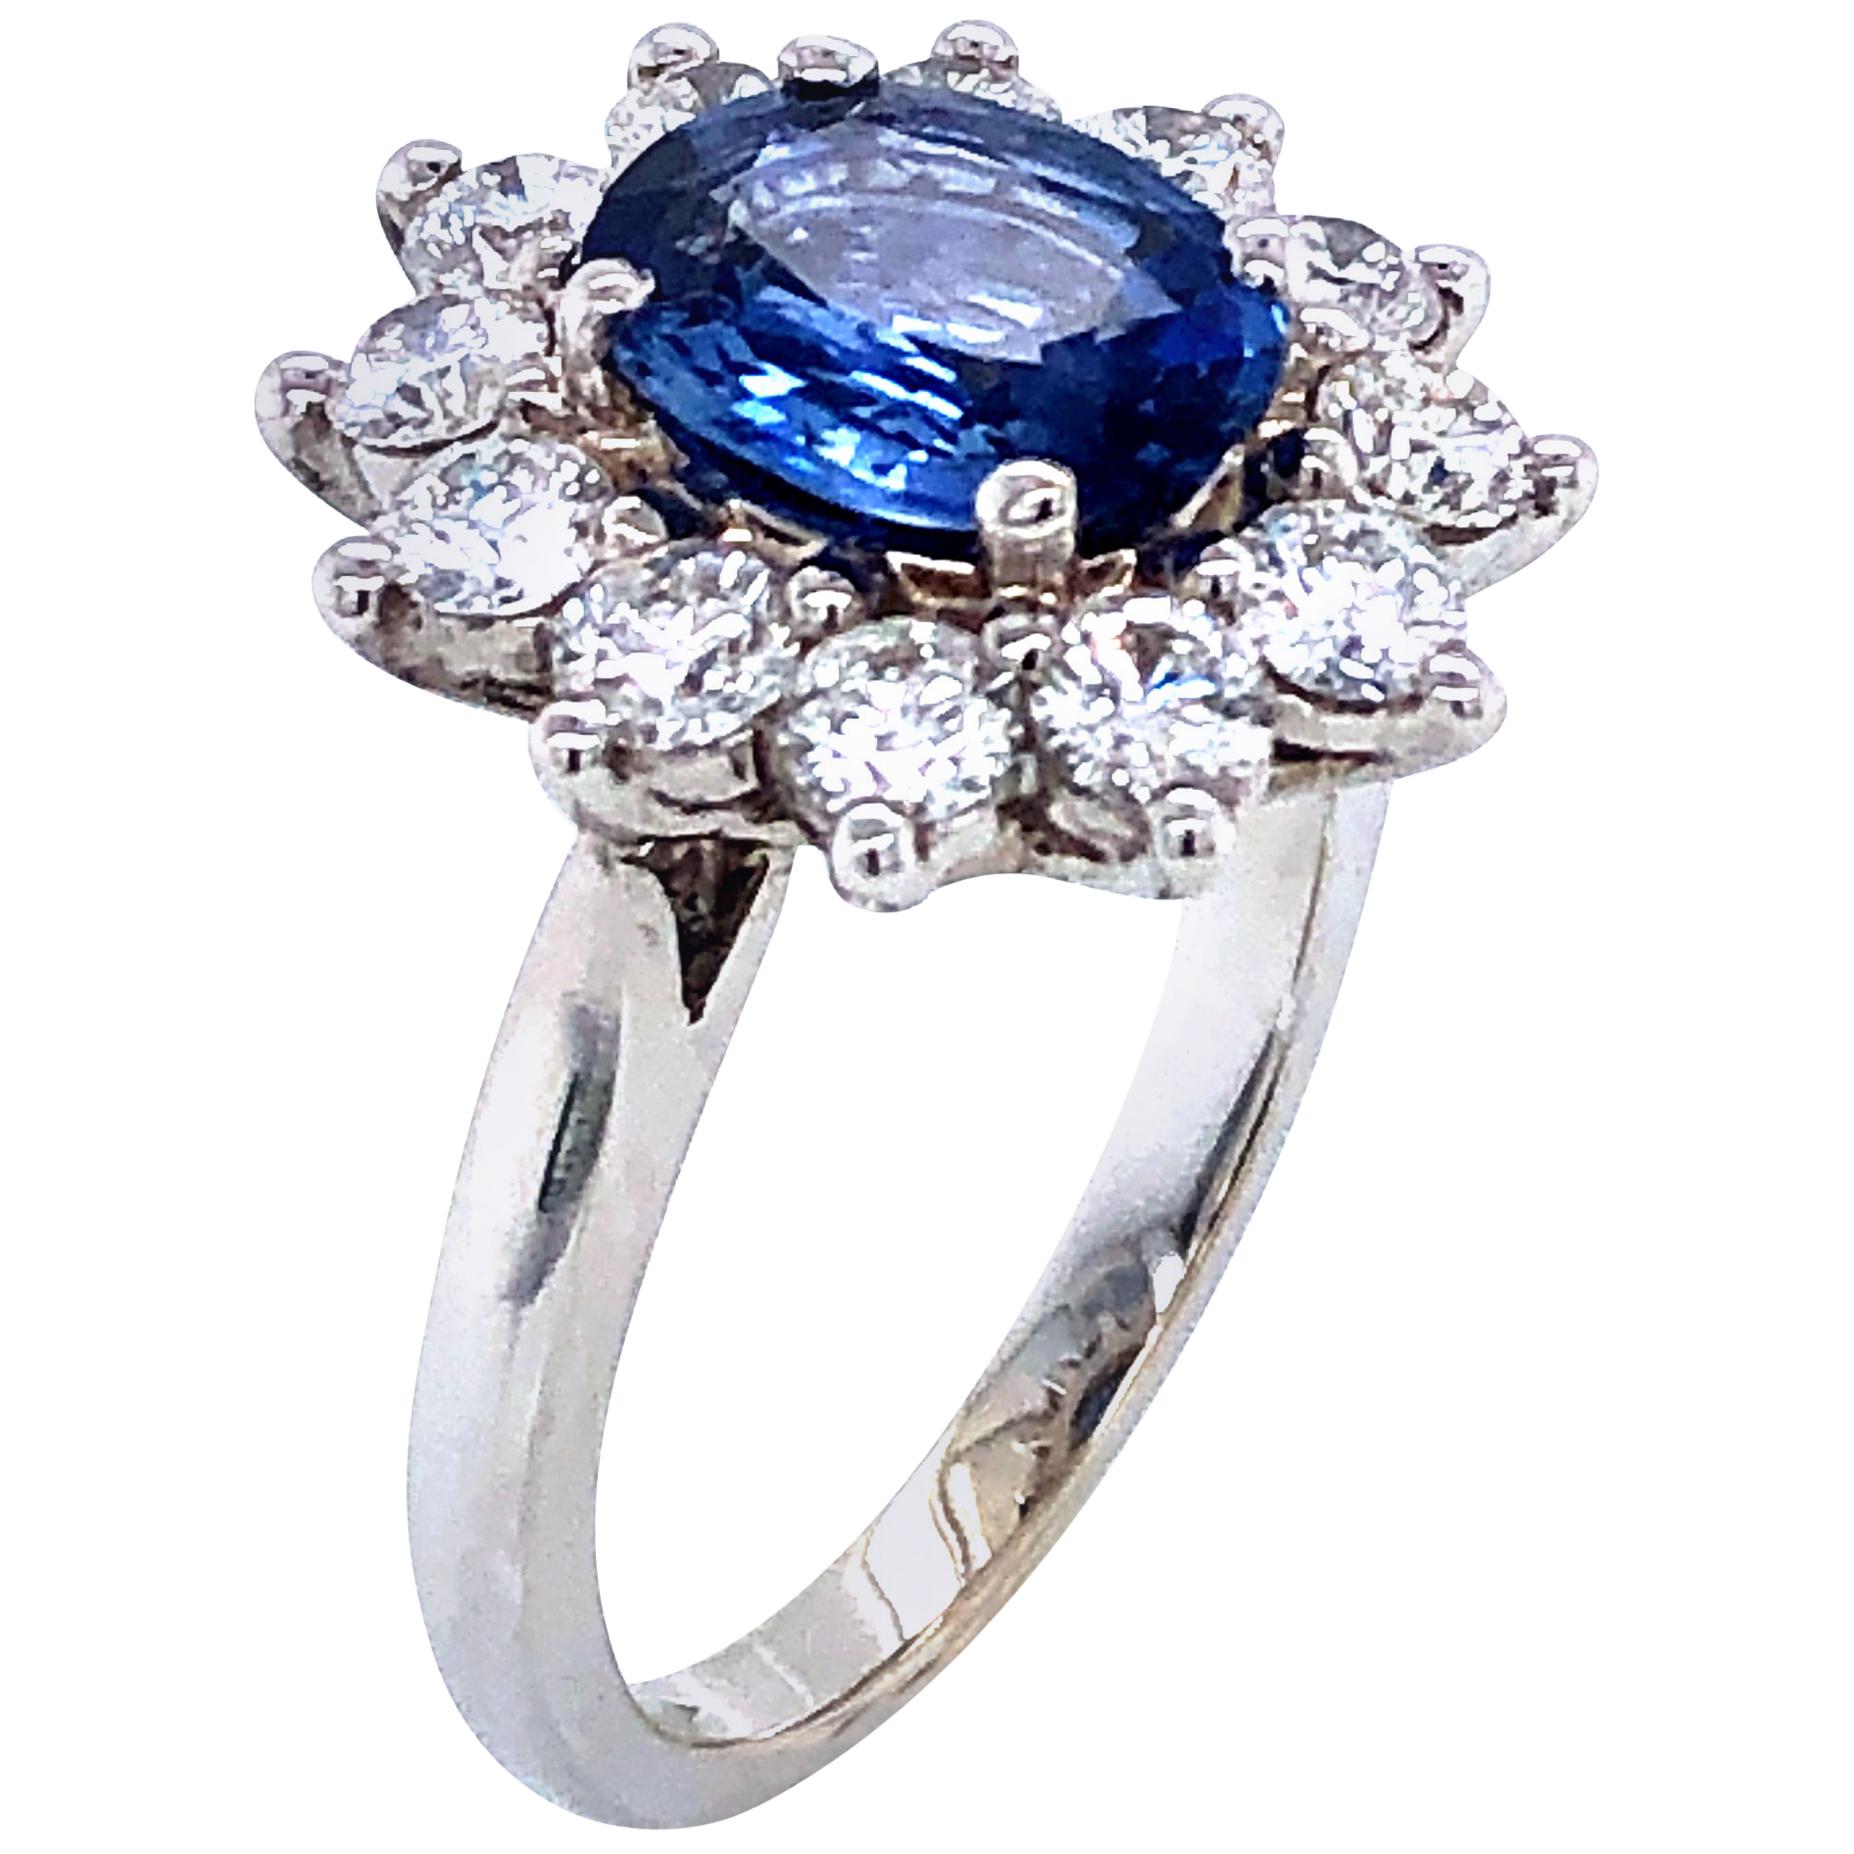 Royal Ceylon Sapphire and White Diamonds on White Gold Engagement Ring